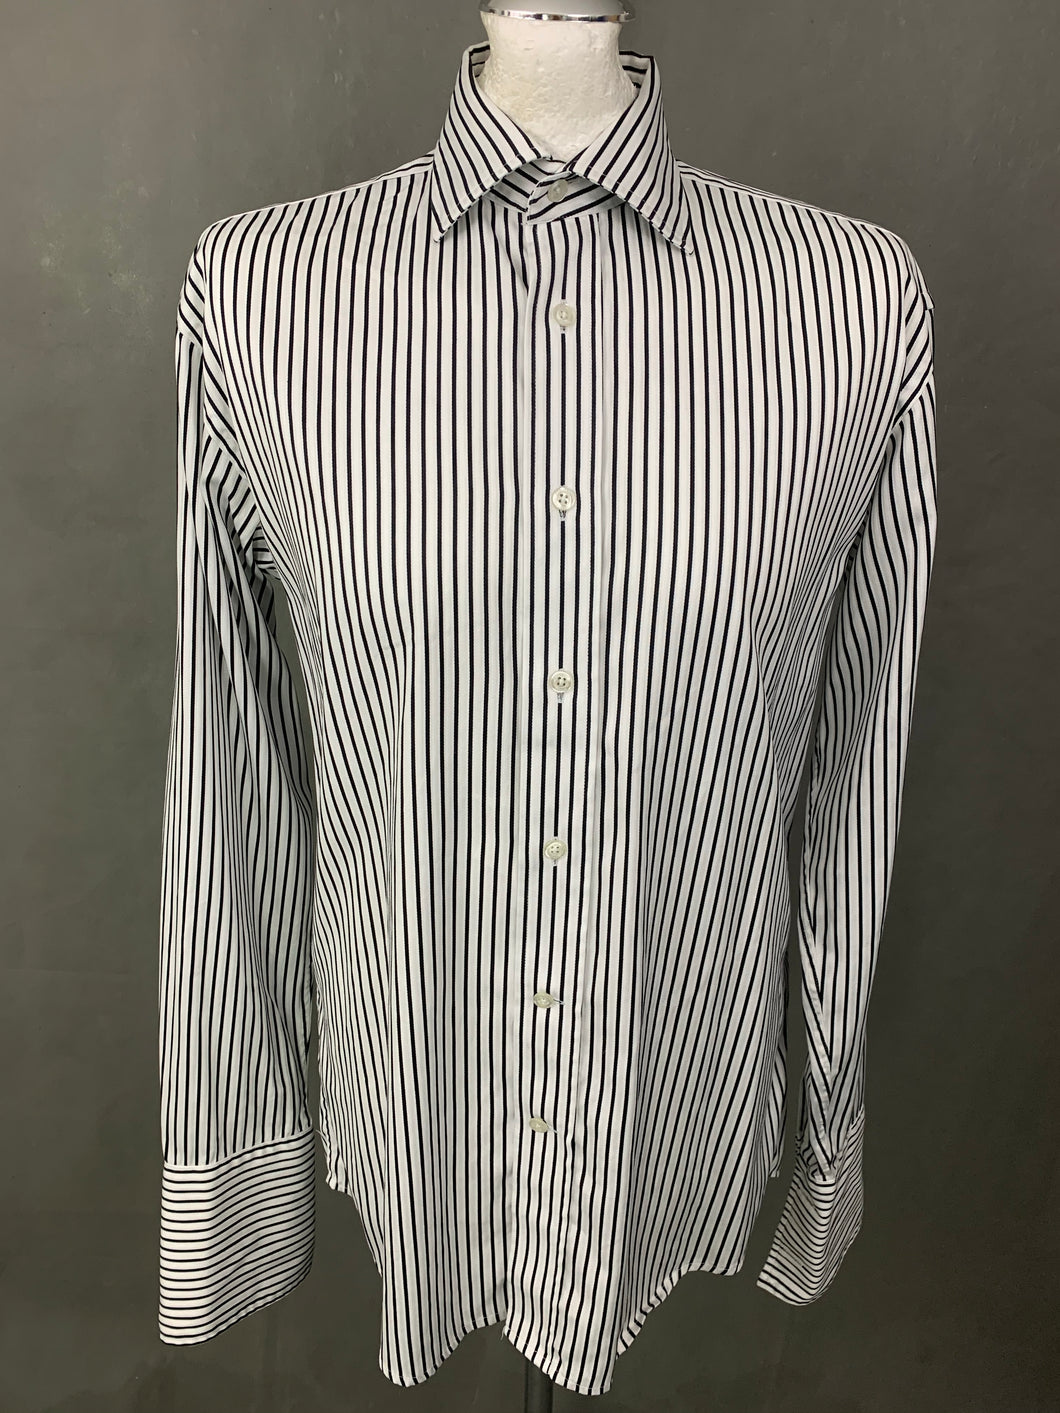 DUCHAMP London Black & White Striped SHIRT Size 15.5